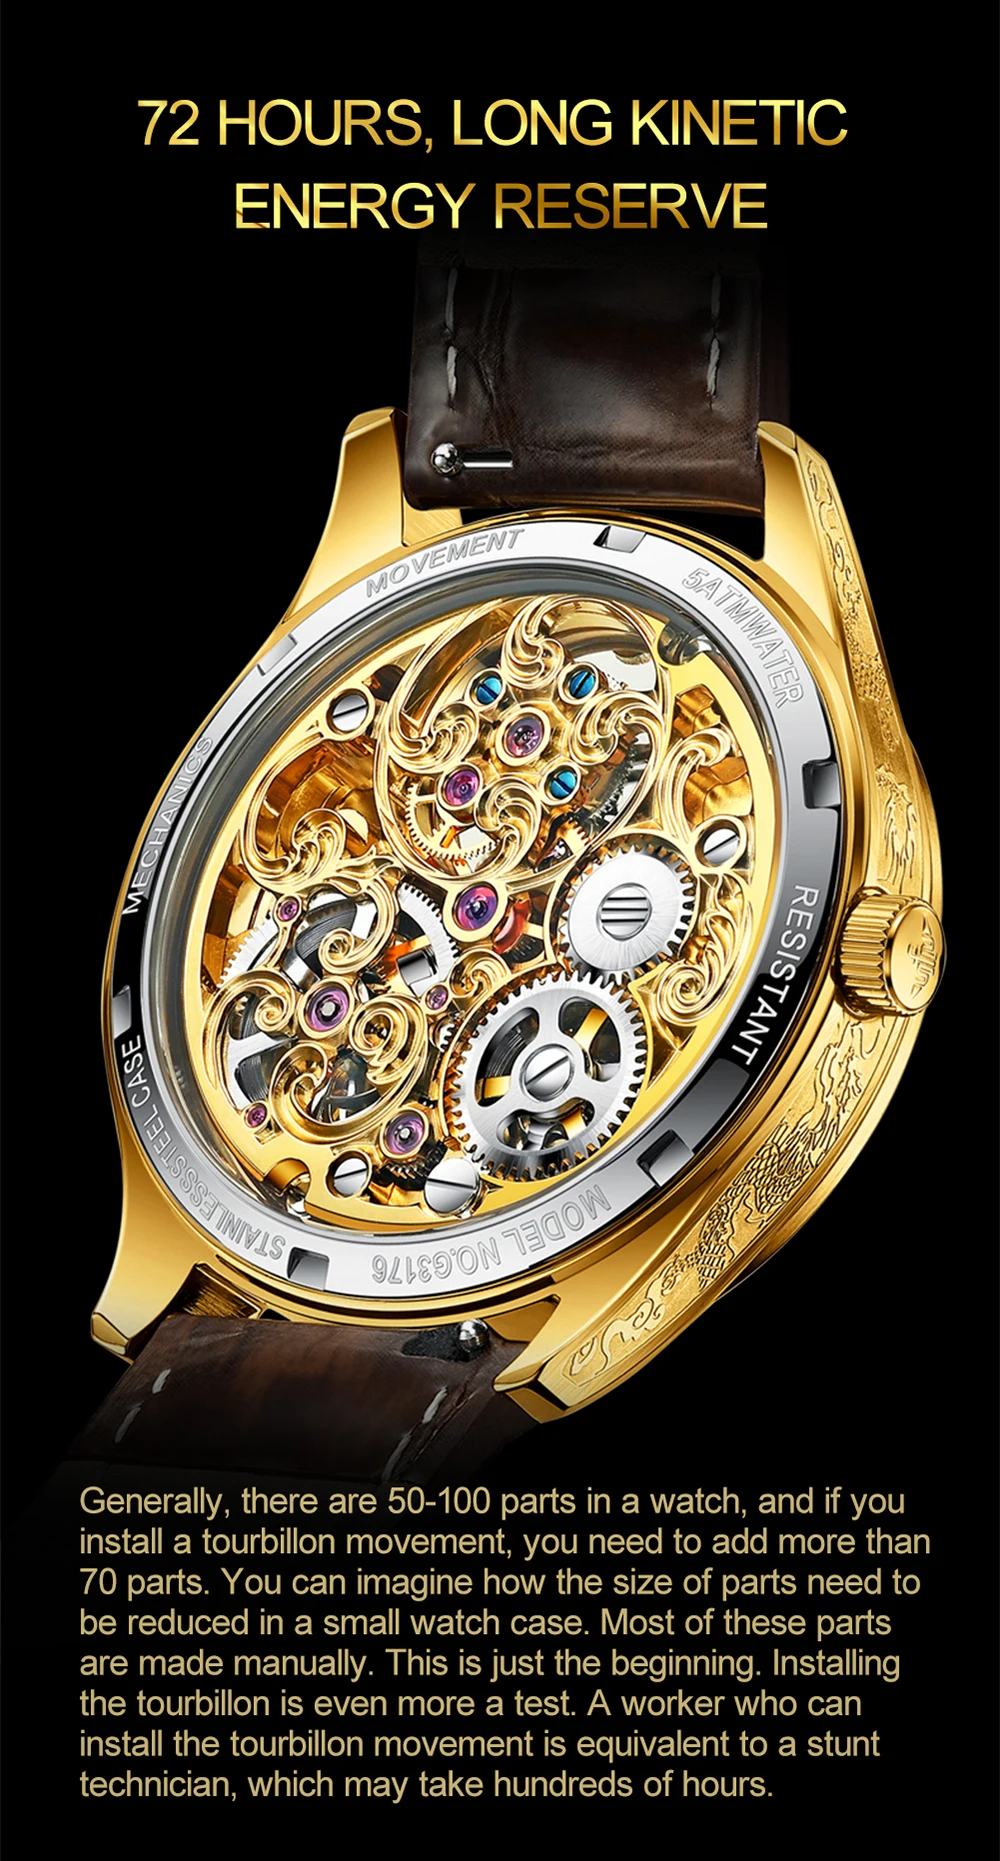 OUPINKE luxury brand watches | GoldYSofT Sale Online